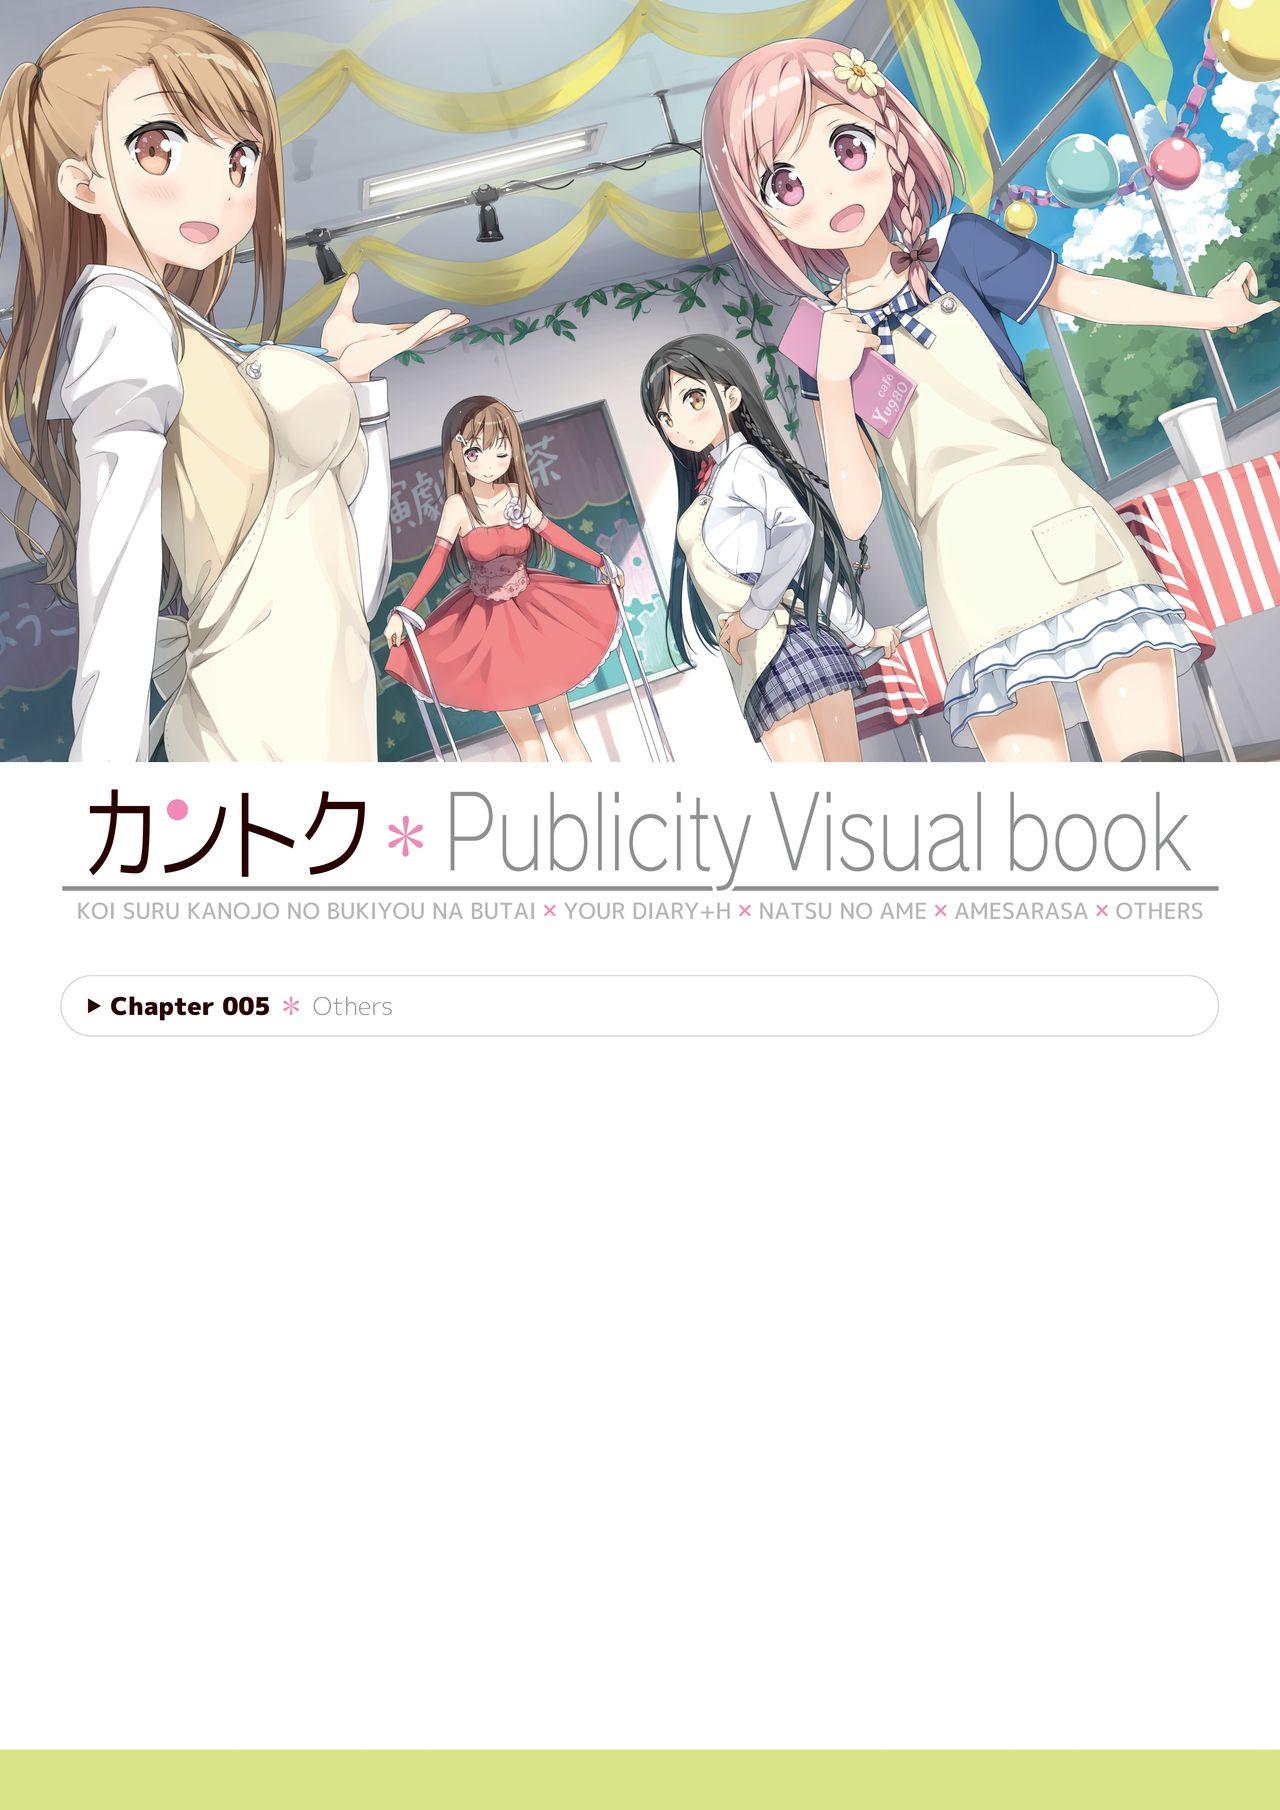 Kantoku Publicity Visual book 157